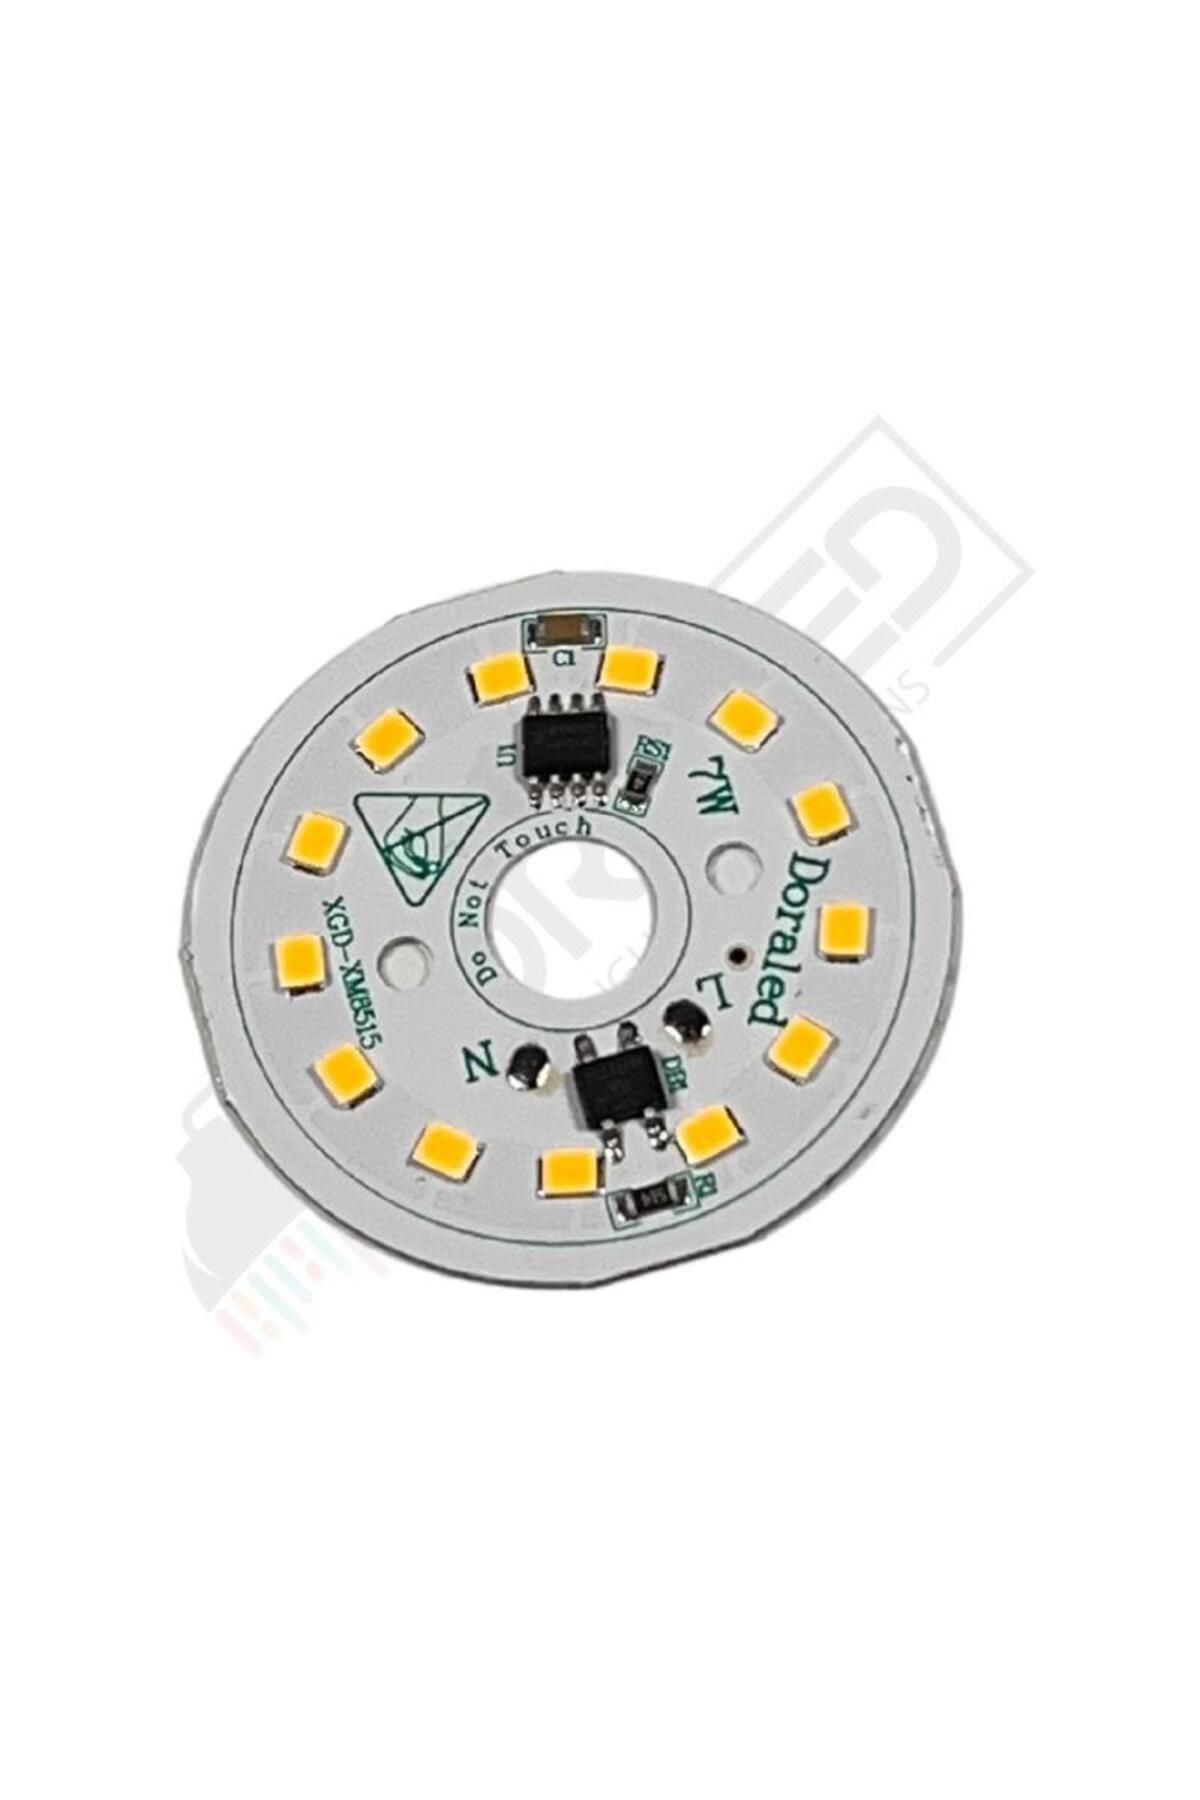 DORA LED 220volt 7watt Smd 2835 Ledli Led Modül 10mm Delik Çaplı Gün Işığı 220v 7w Avize Ledi 44mm(3 ADET)